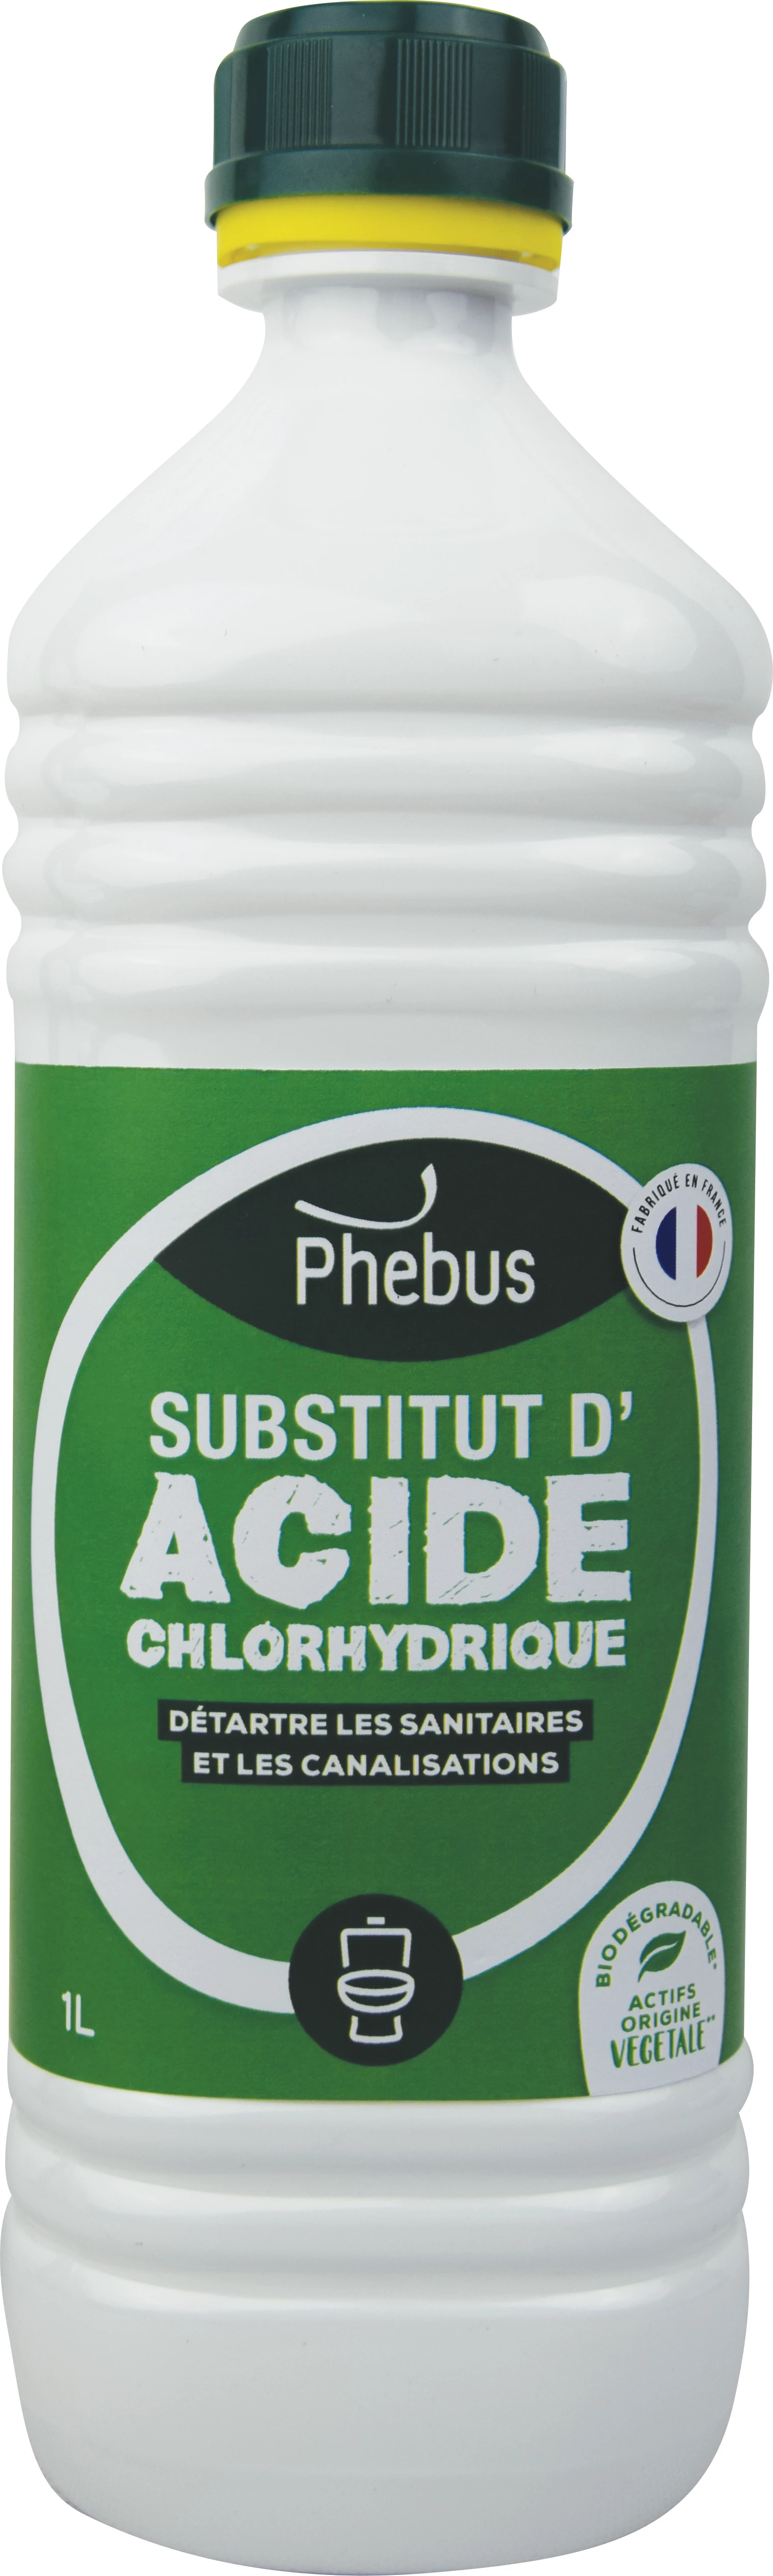 Substitut Acide Chlorydrique 1